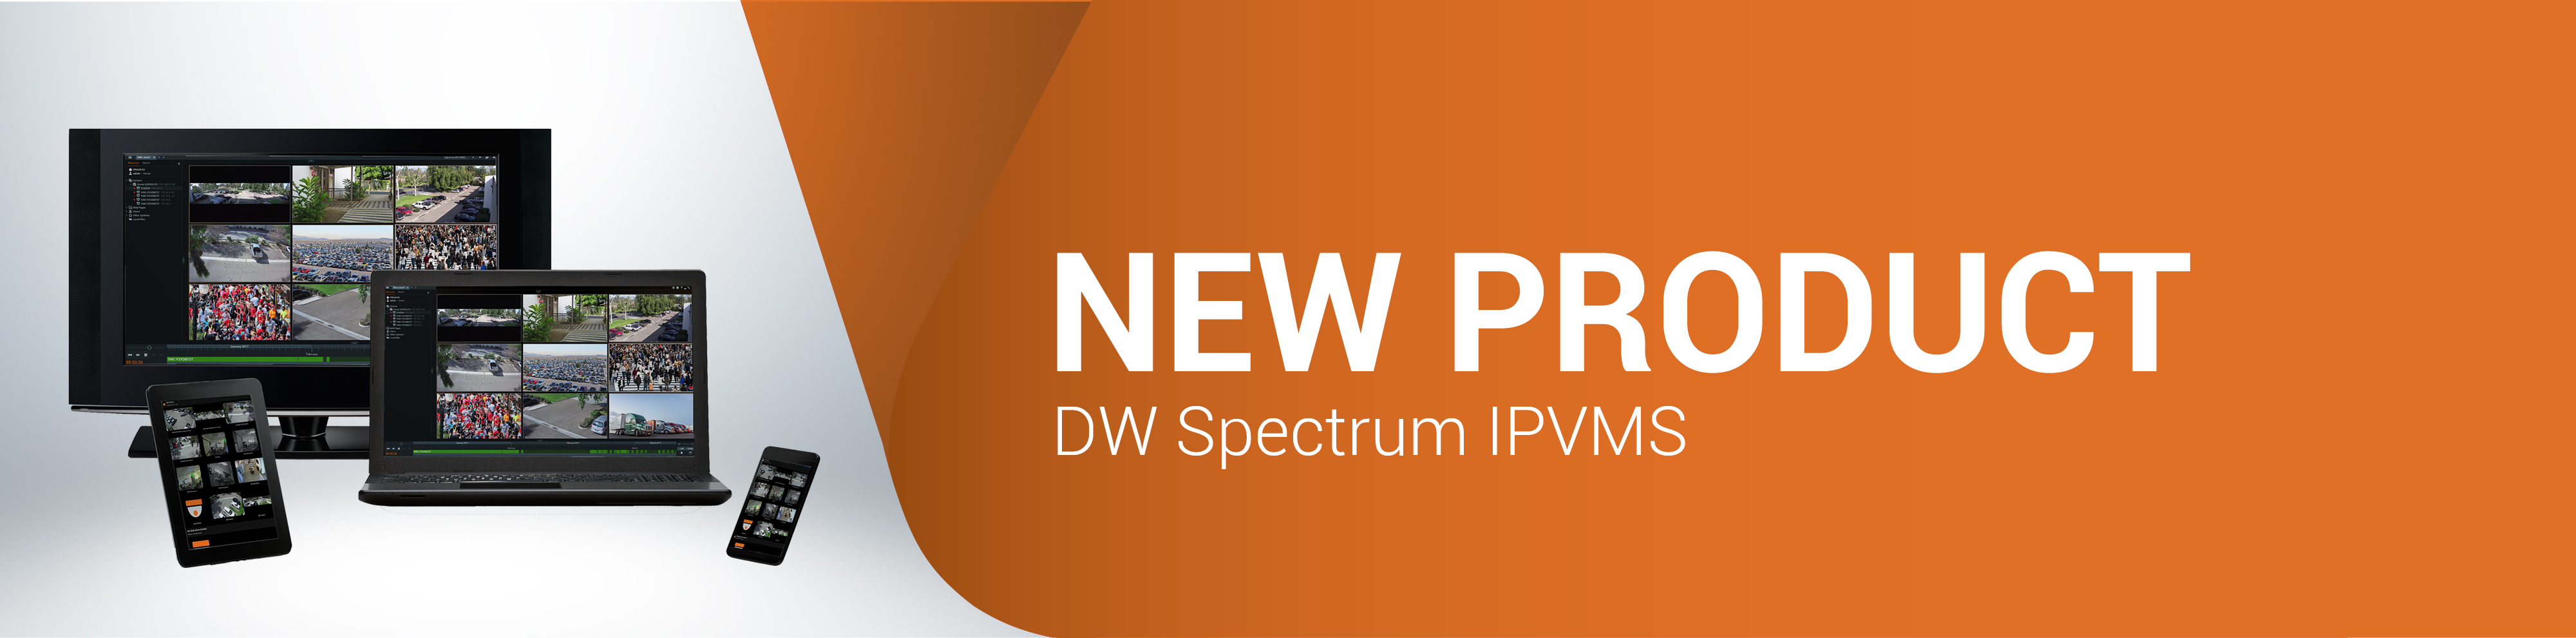 New Product- DW Spectrum IPVMS